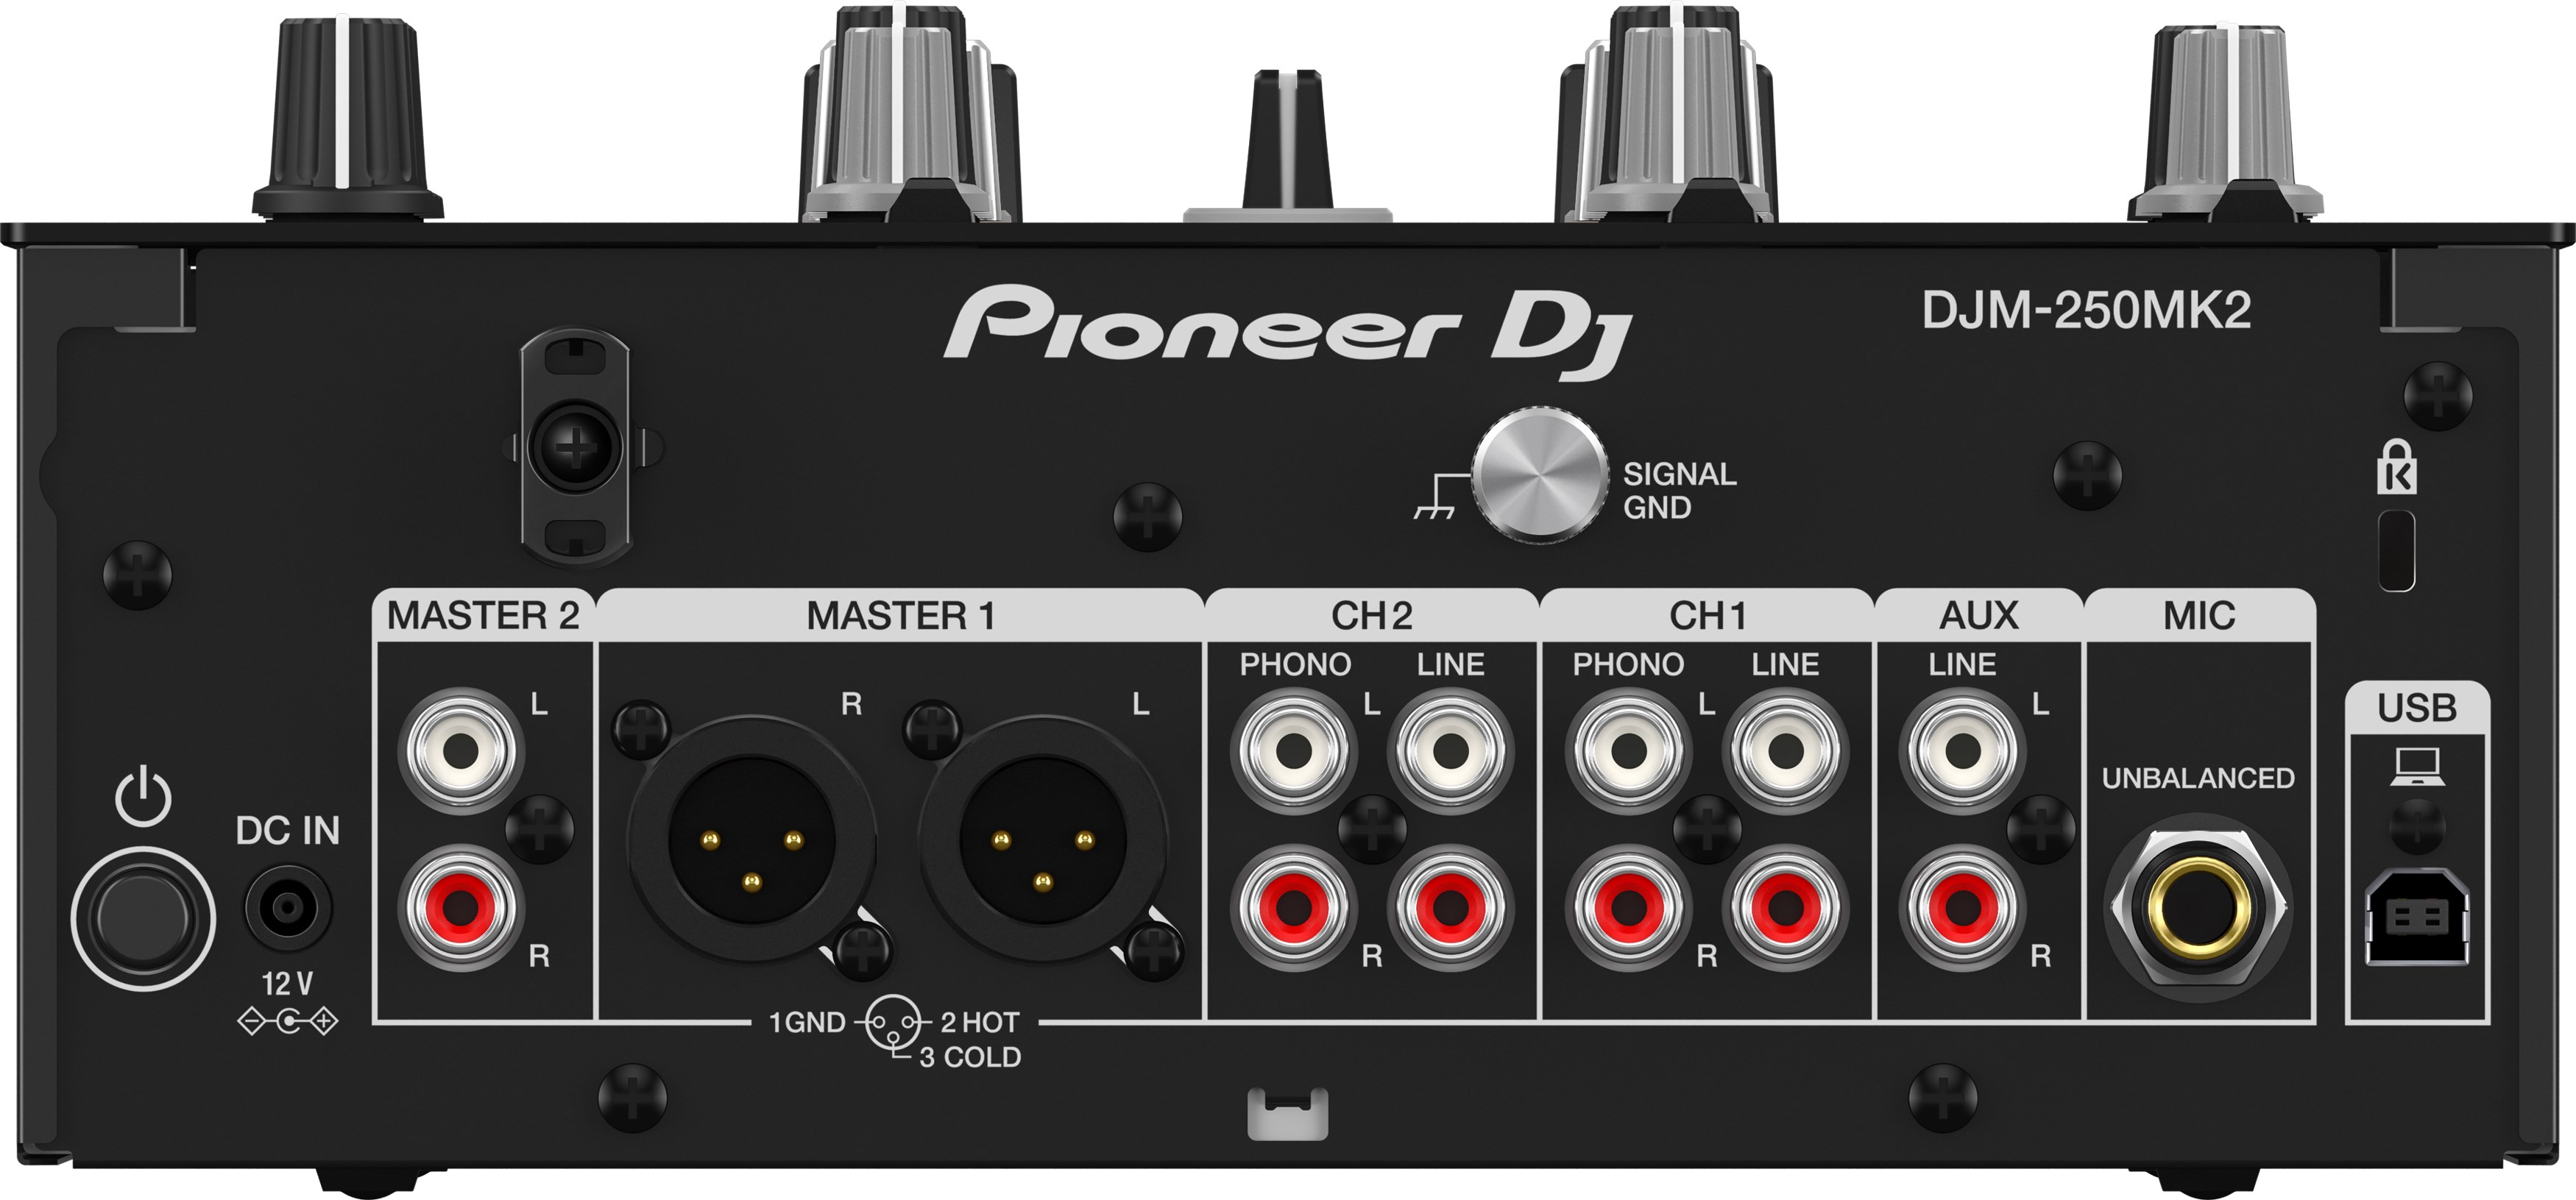 Pioneer Dj Djm-250mk2 - Table De Mixage Dj - Variation 1